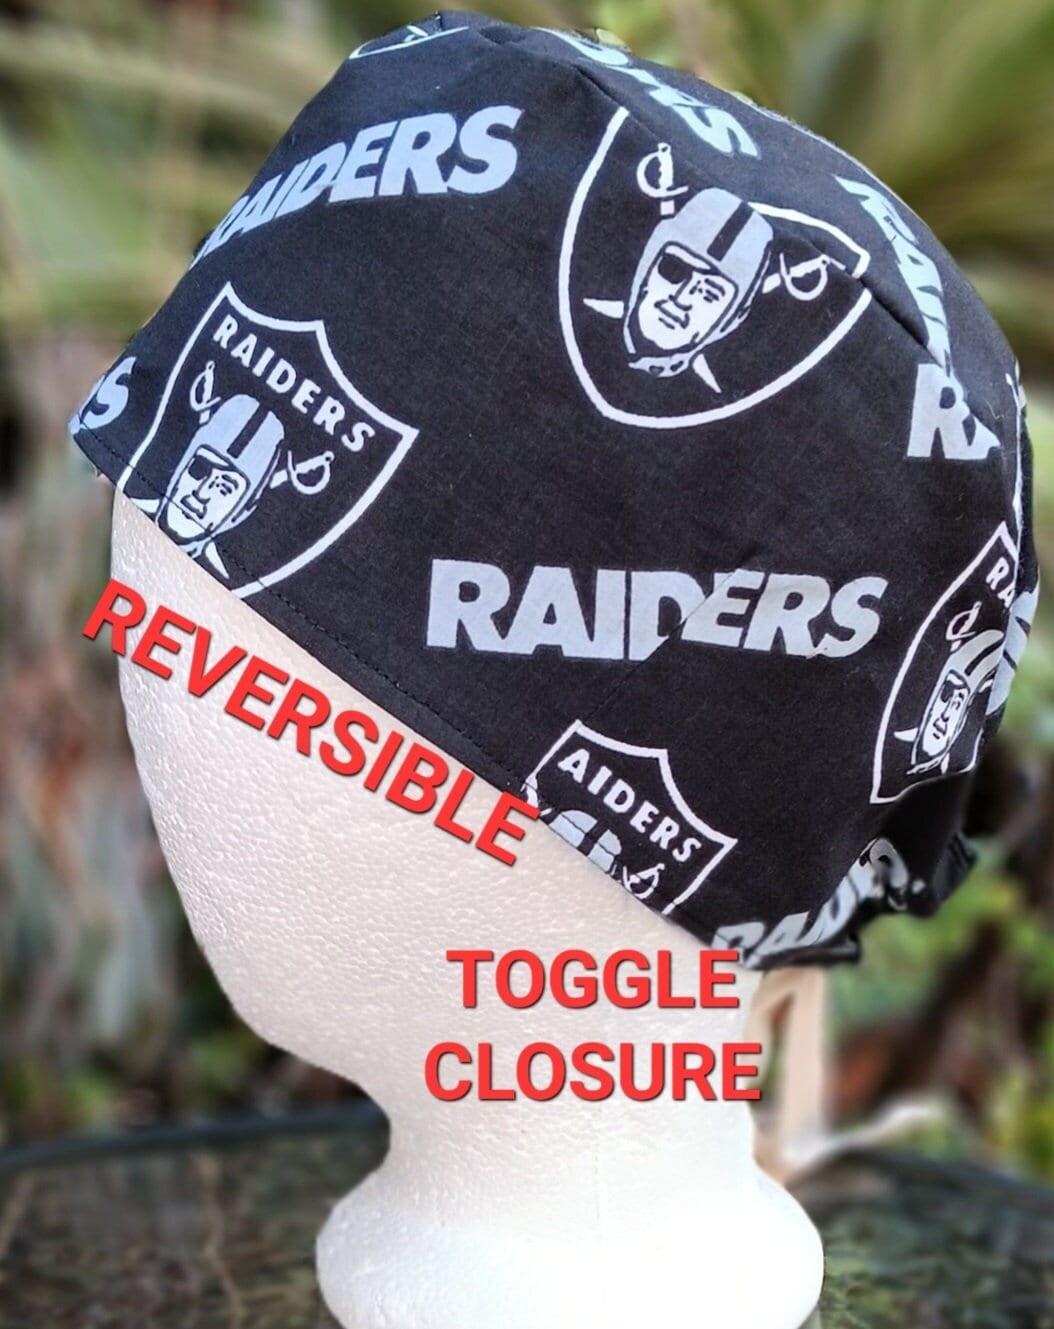 Reversible Las Vegas Raiders scrub cap, adjustable with toggle cord lock, unisex, nurse, technician, food service, football, handmade